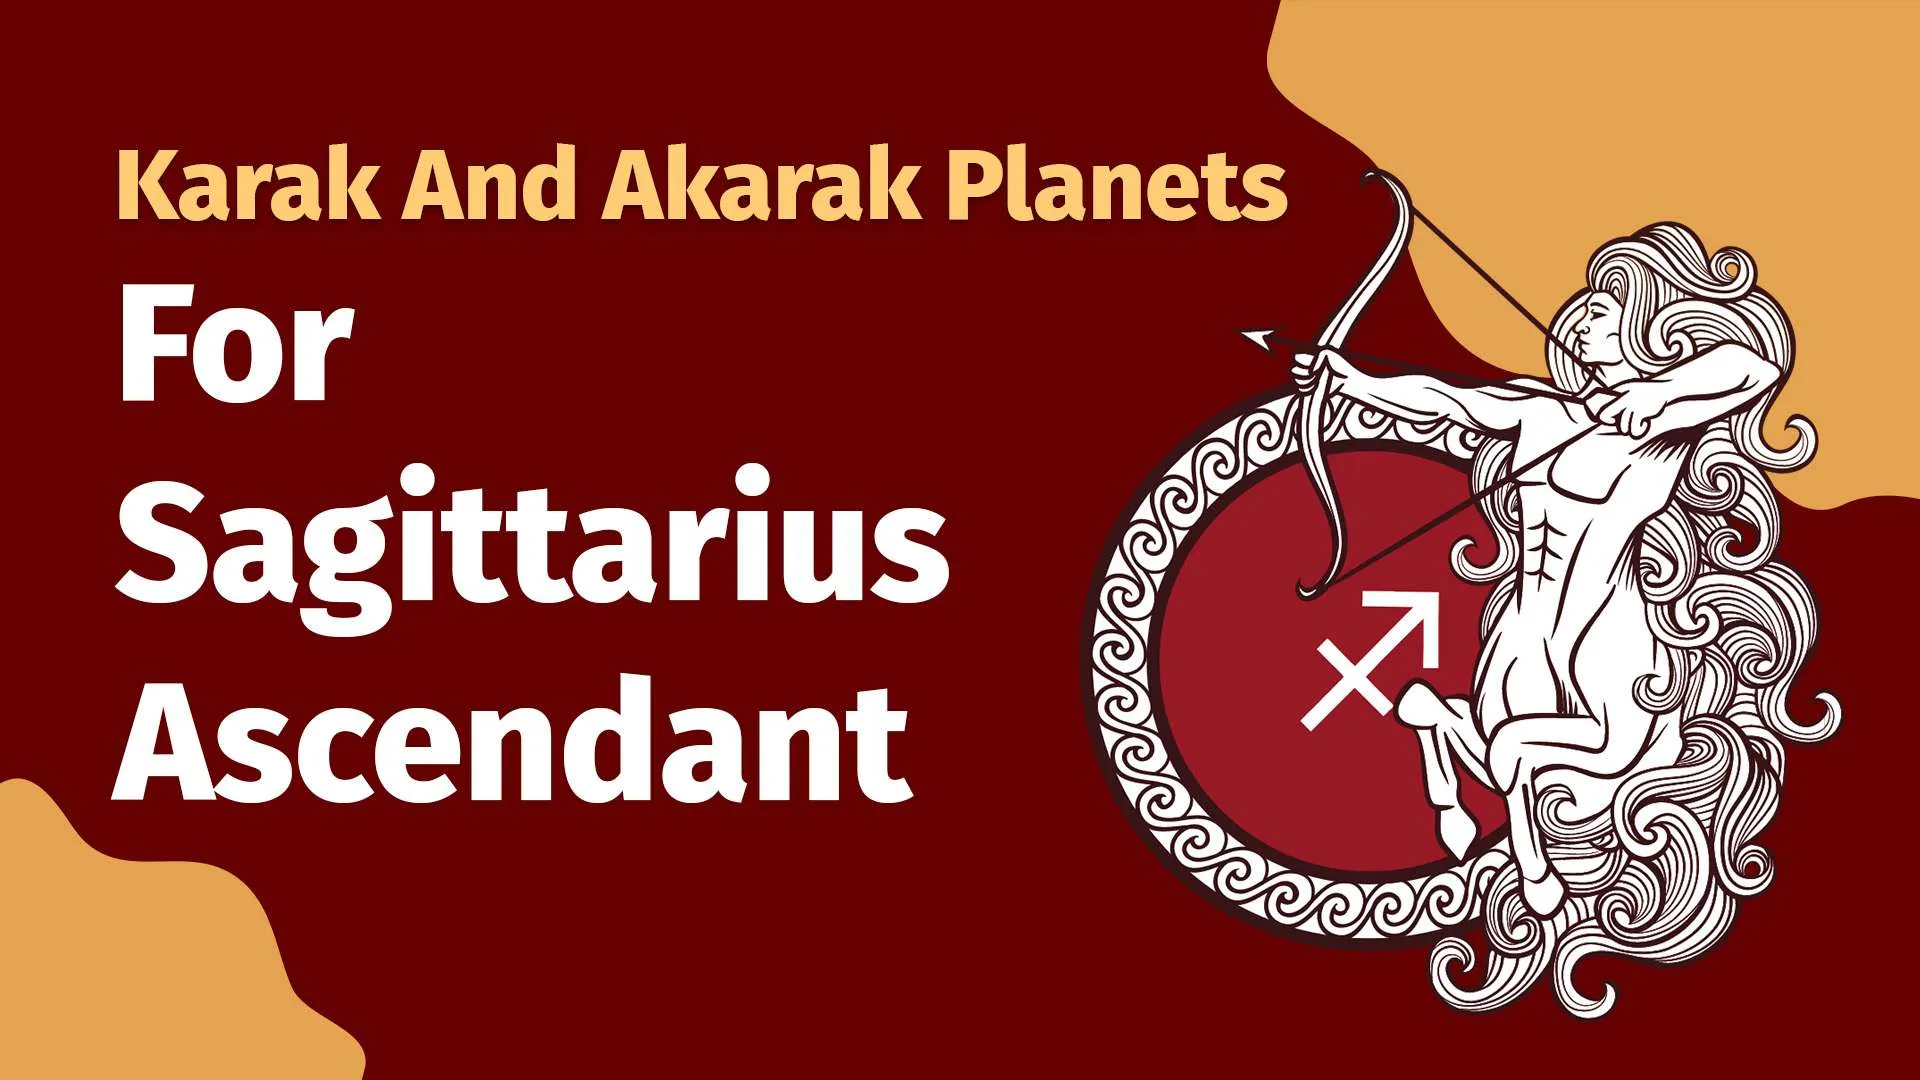 Karak and Akarak planets for Sagittariius Ascendant